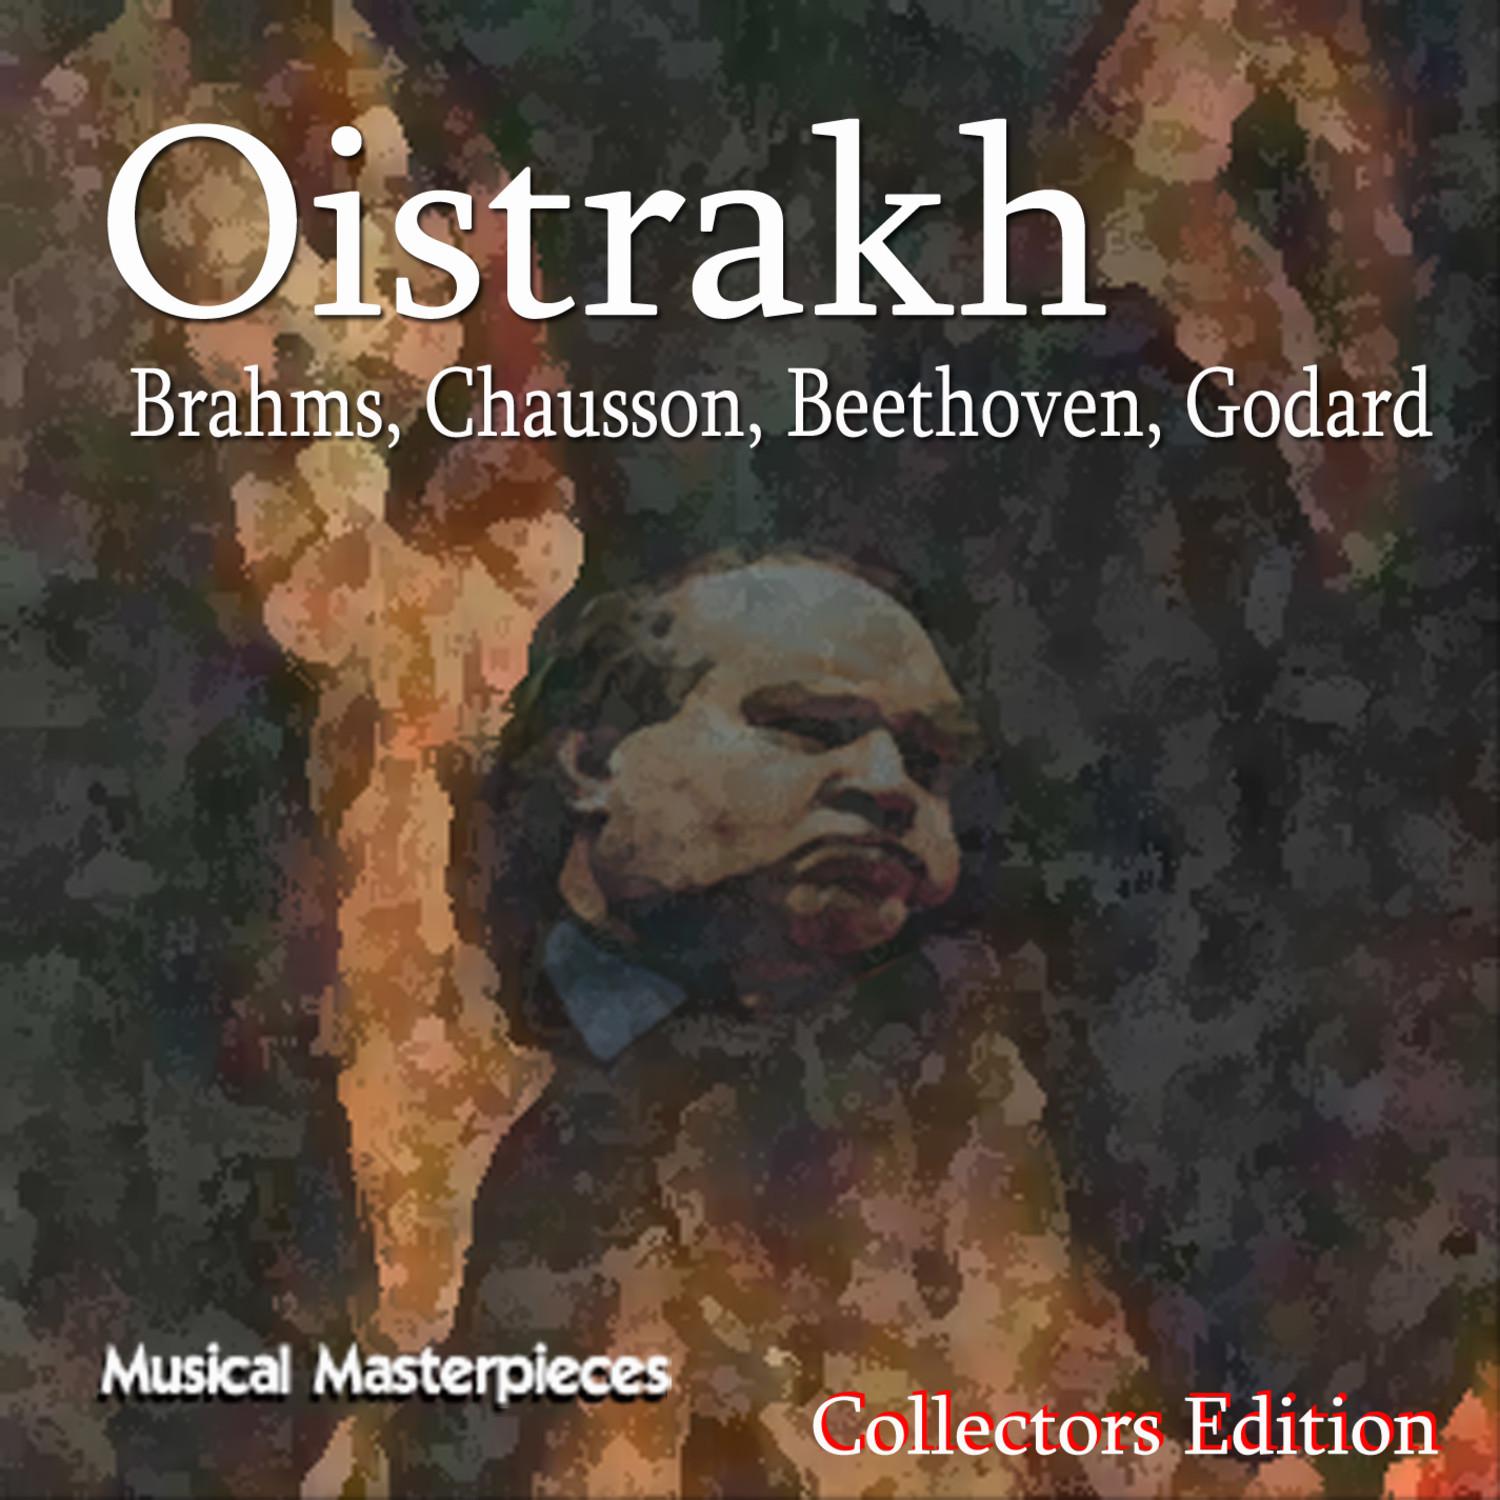 Oistrakh - Brahms, Chausson, Beethoven, Godard